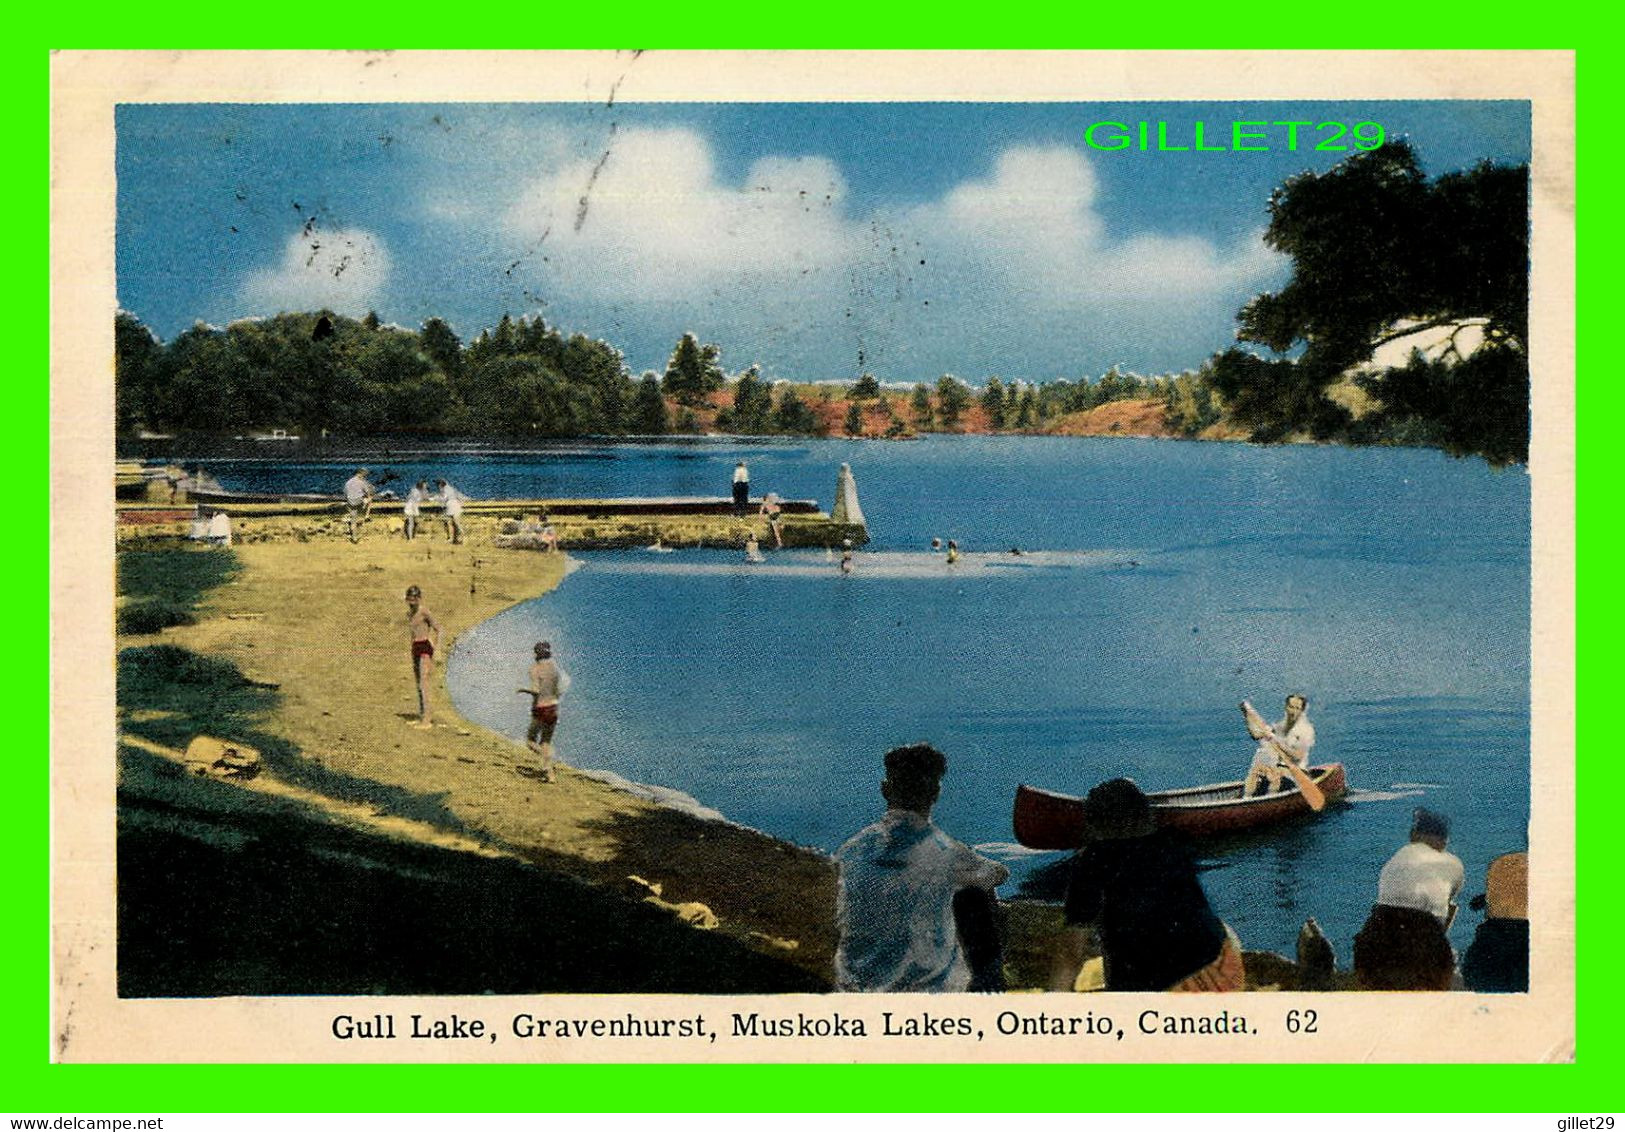 MUSKOKA, ONTARIO - GULL LAKE, GRAVENHURST, MUSKOKA LAKES - ANIMATED PEOPLES - TRAVEL IN 1948 - - Muskoka